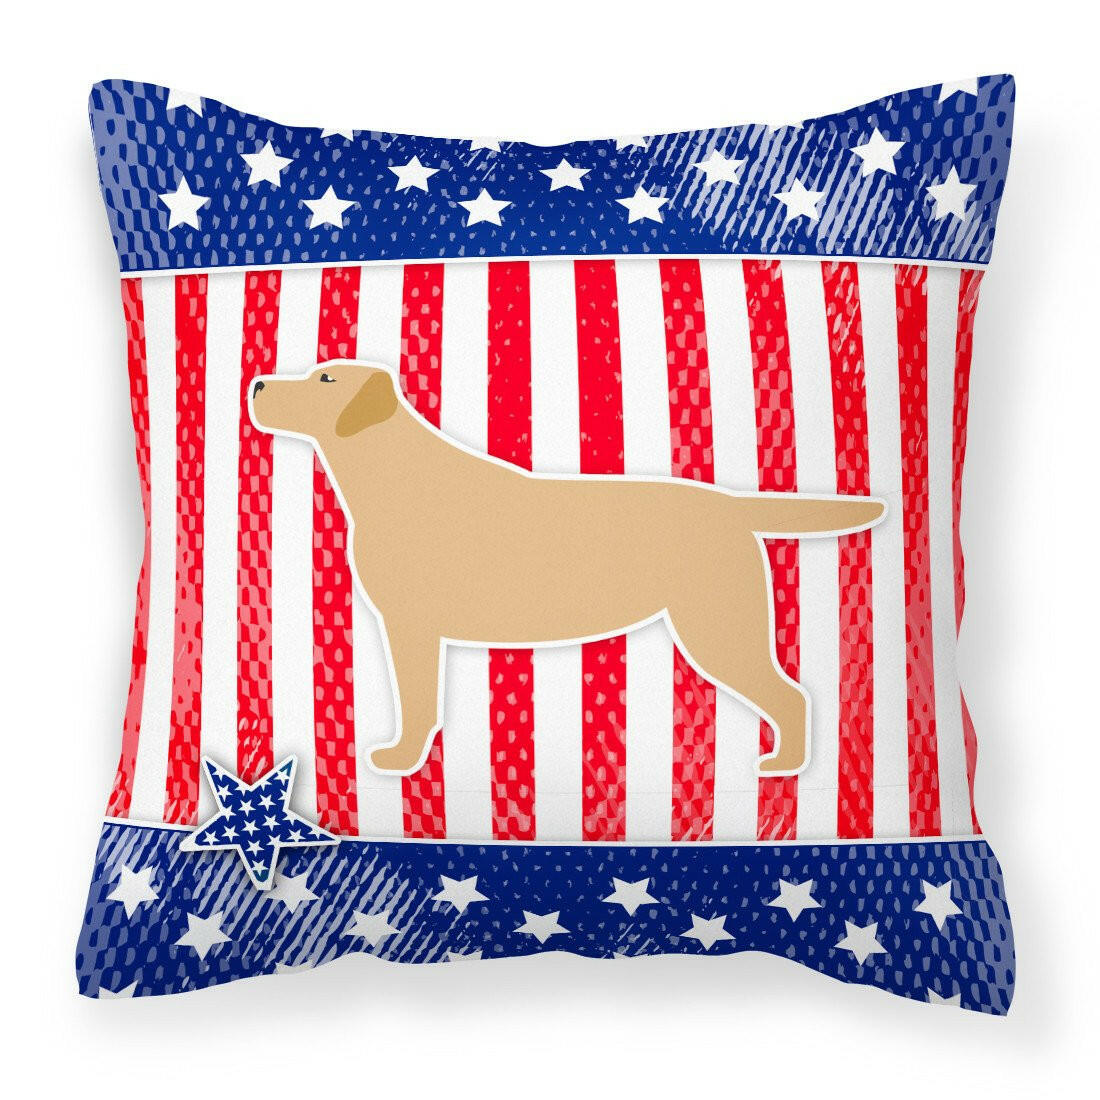 USA Patriotic Yellow Labrador Retriever Fabric Decorative Pillow BB3297PW1818 by Caroline's Treasures